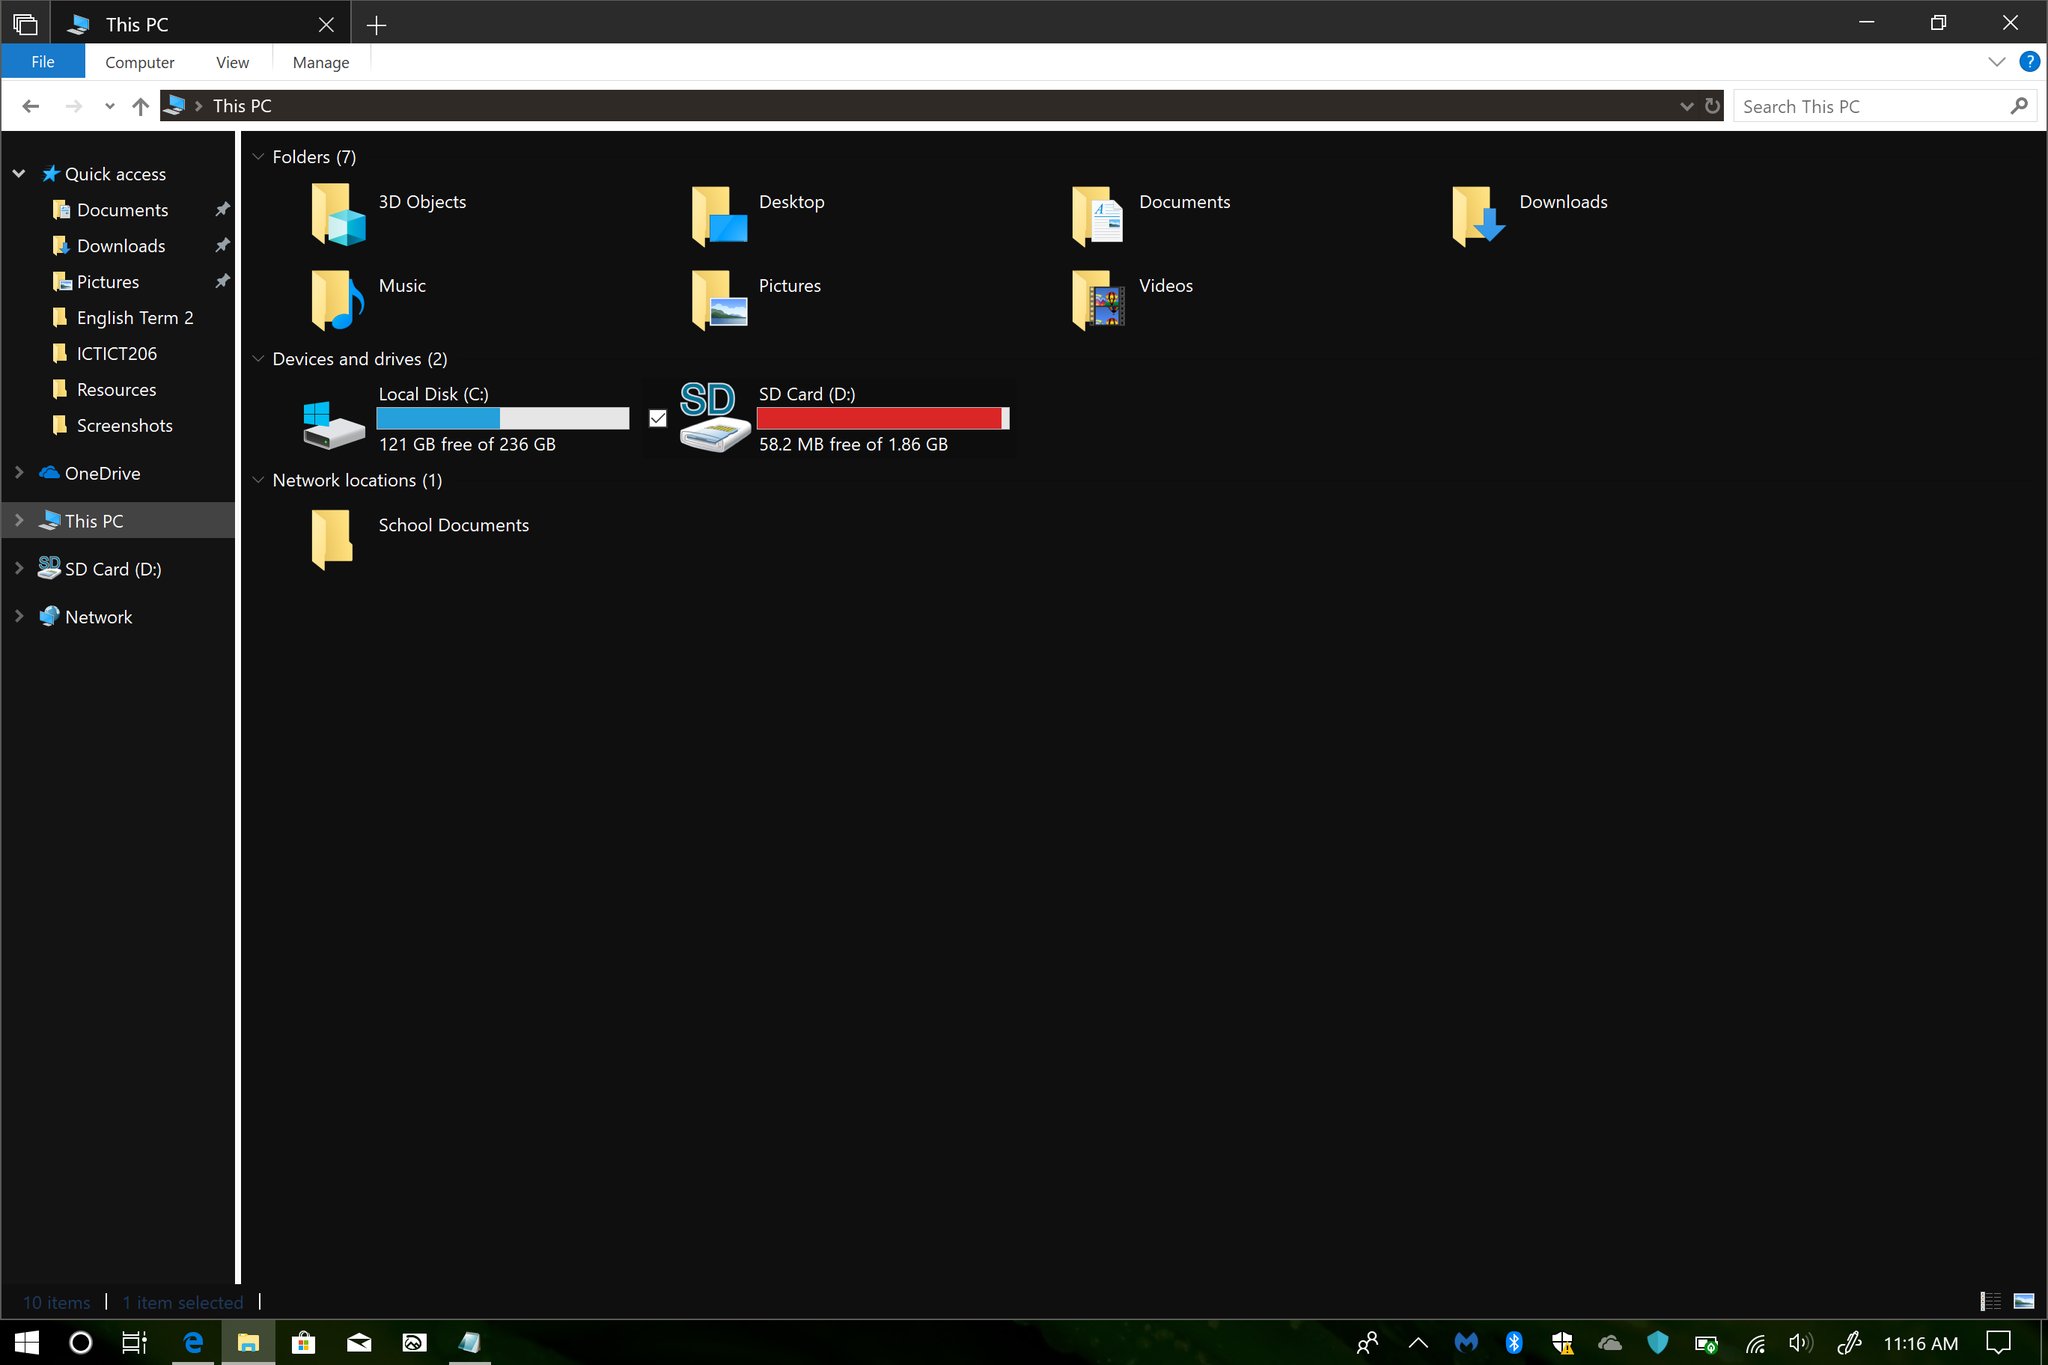 Windows 10 File Explorer S Dark Theme Improved In Latest Redstone 5 Build